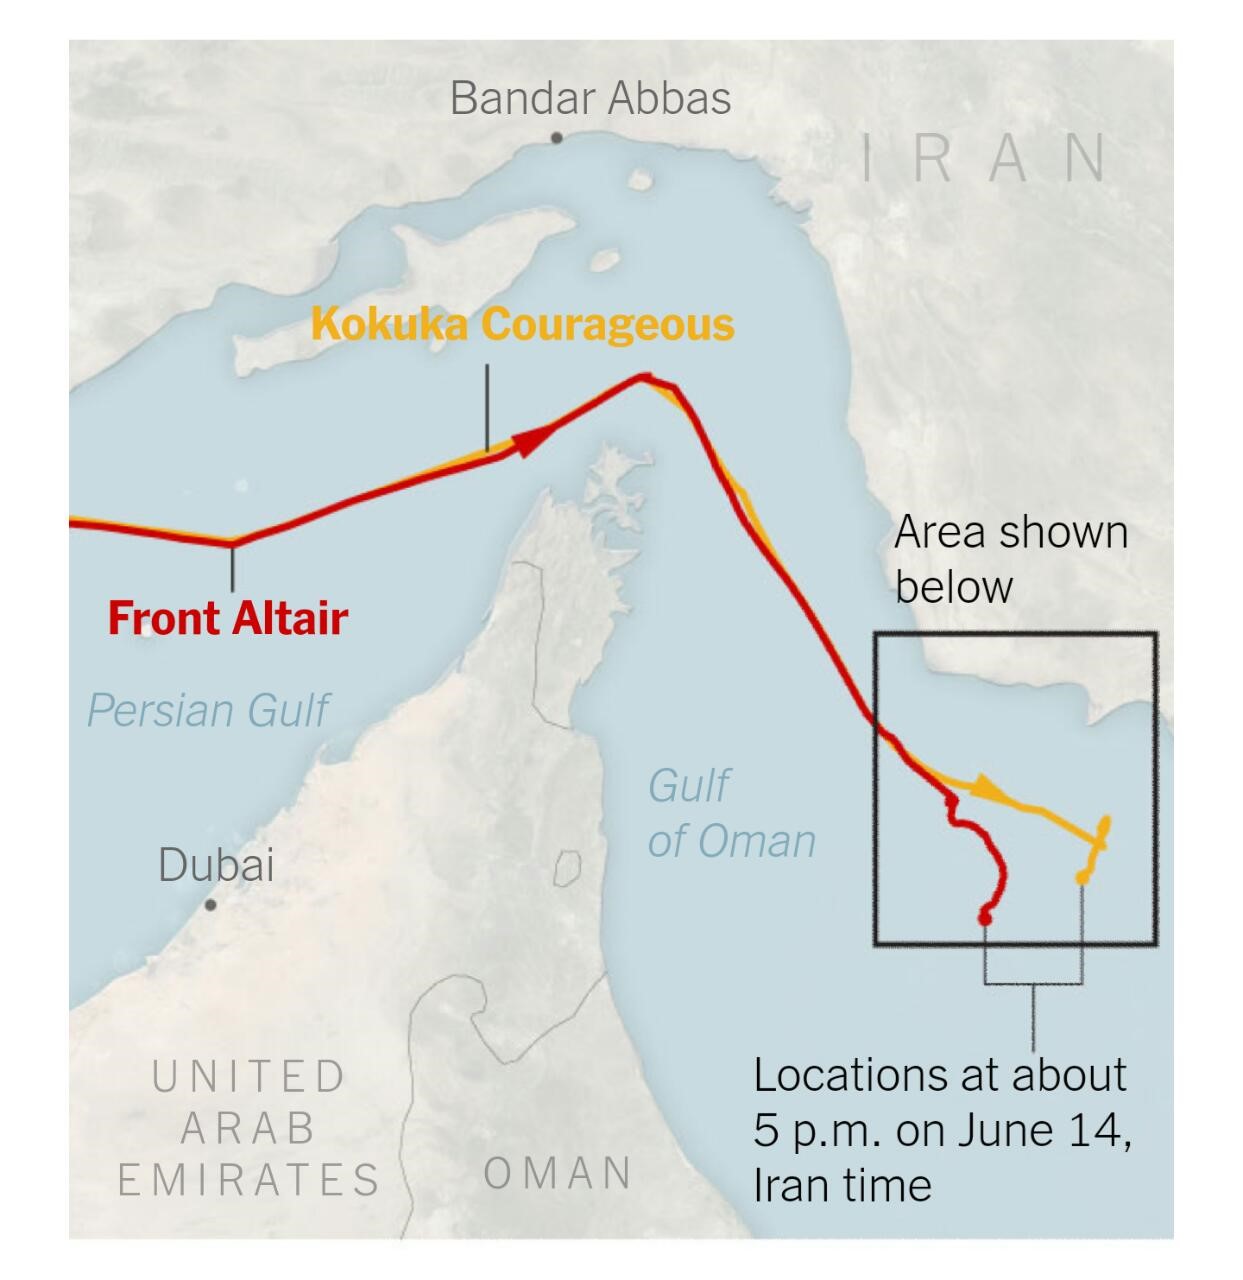 Gulf attack explained - Iran’s aggression or USA’s false flag